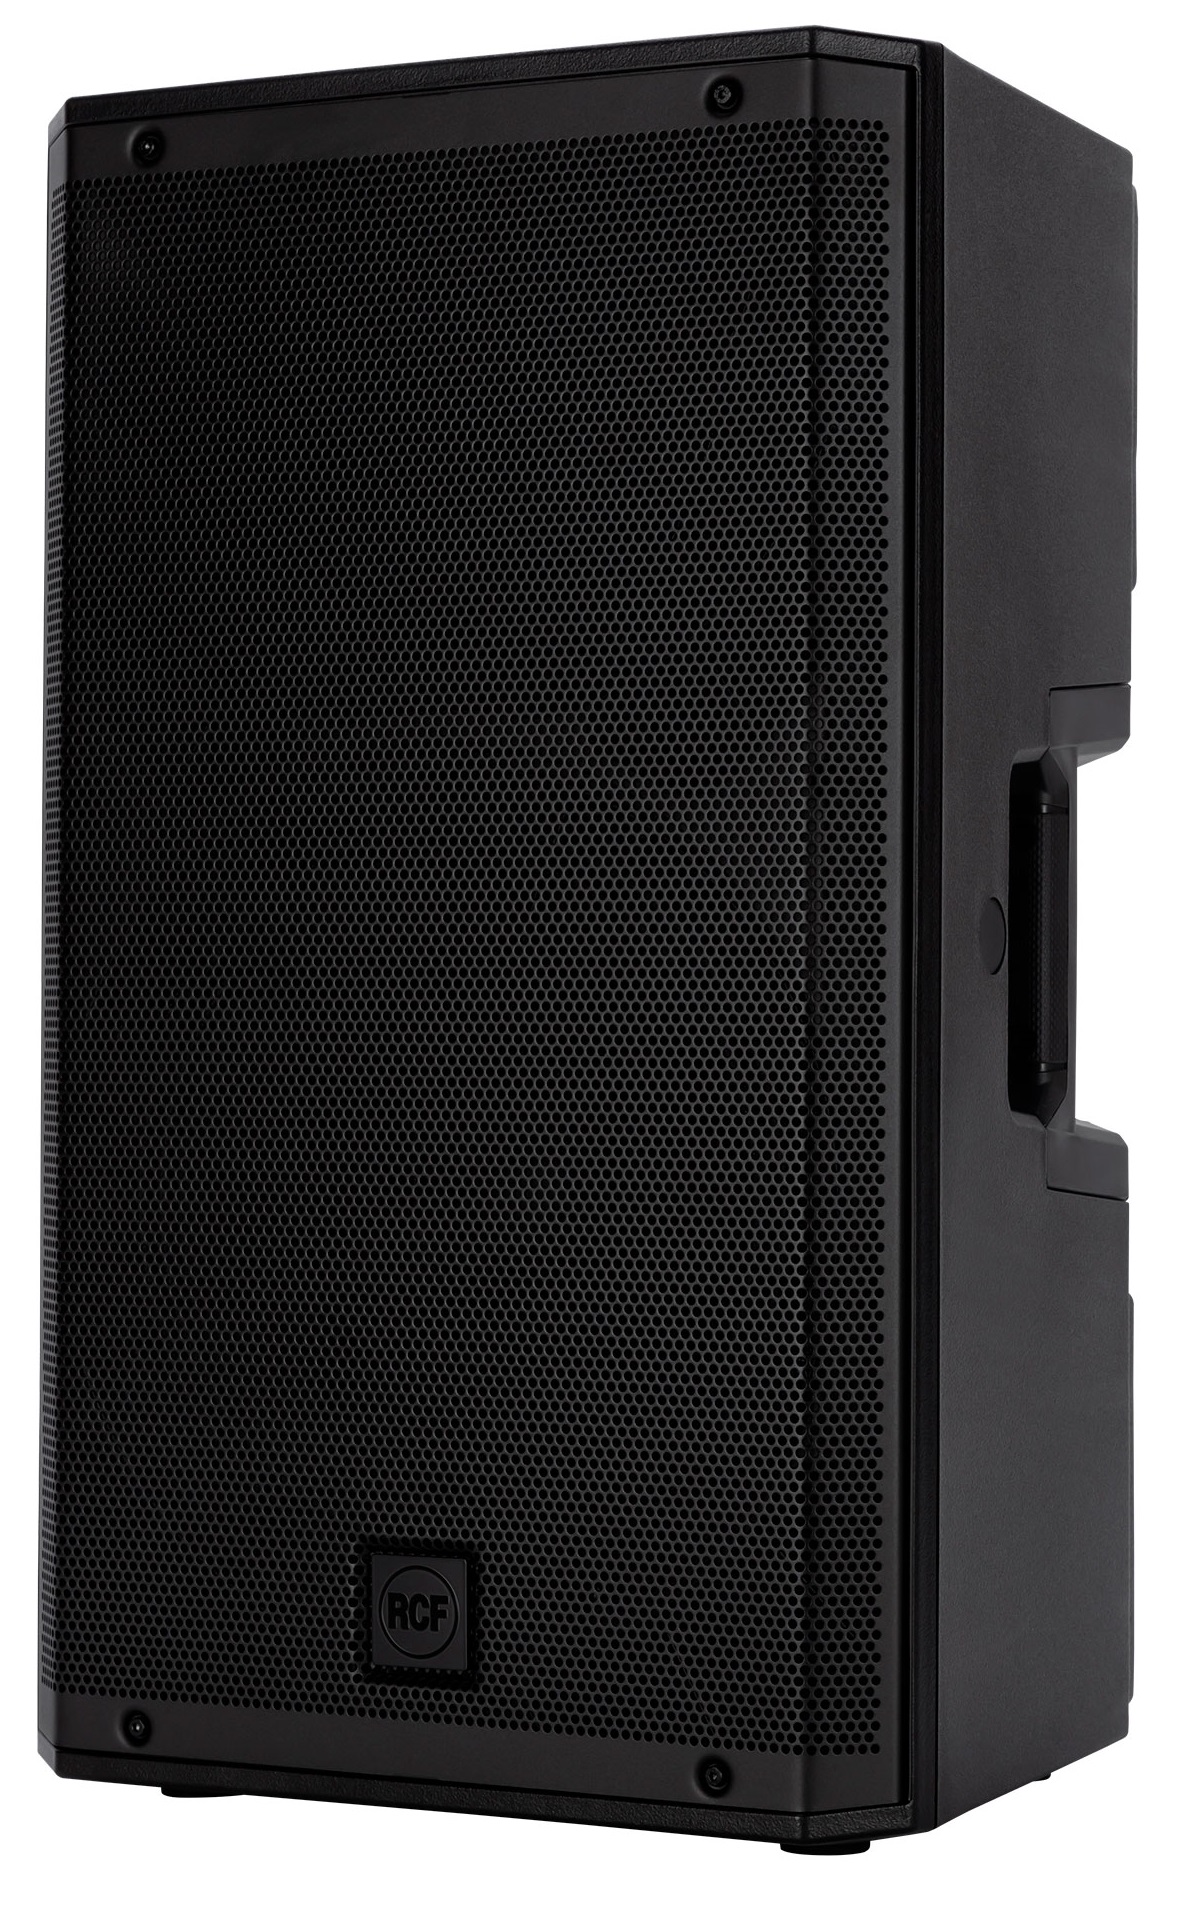 Rcf Art932-a - Active full-range speaker - Variation 1